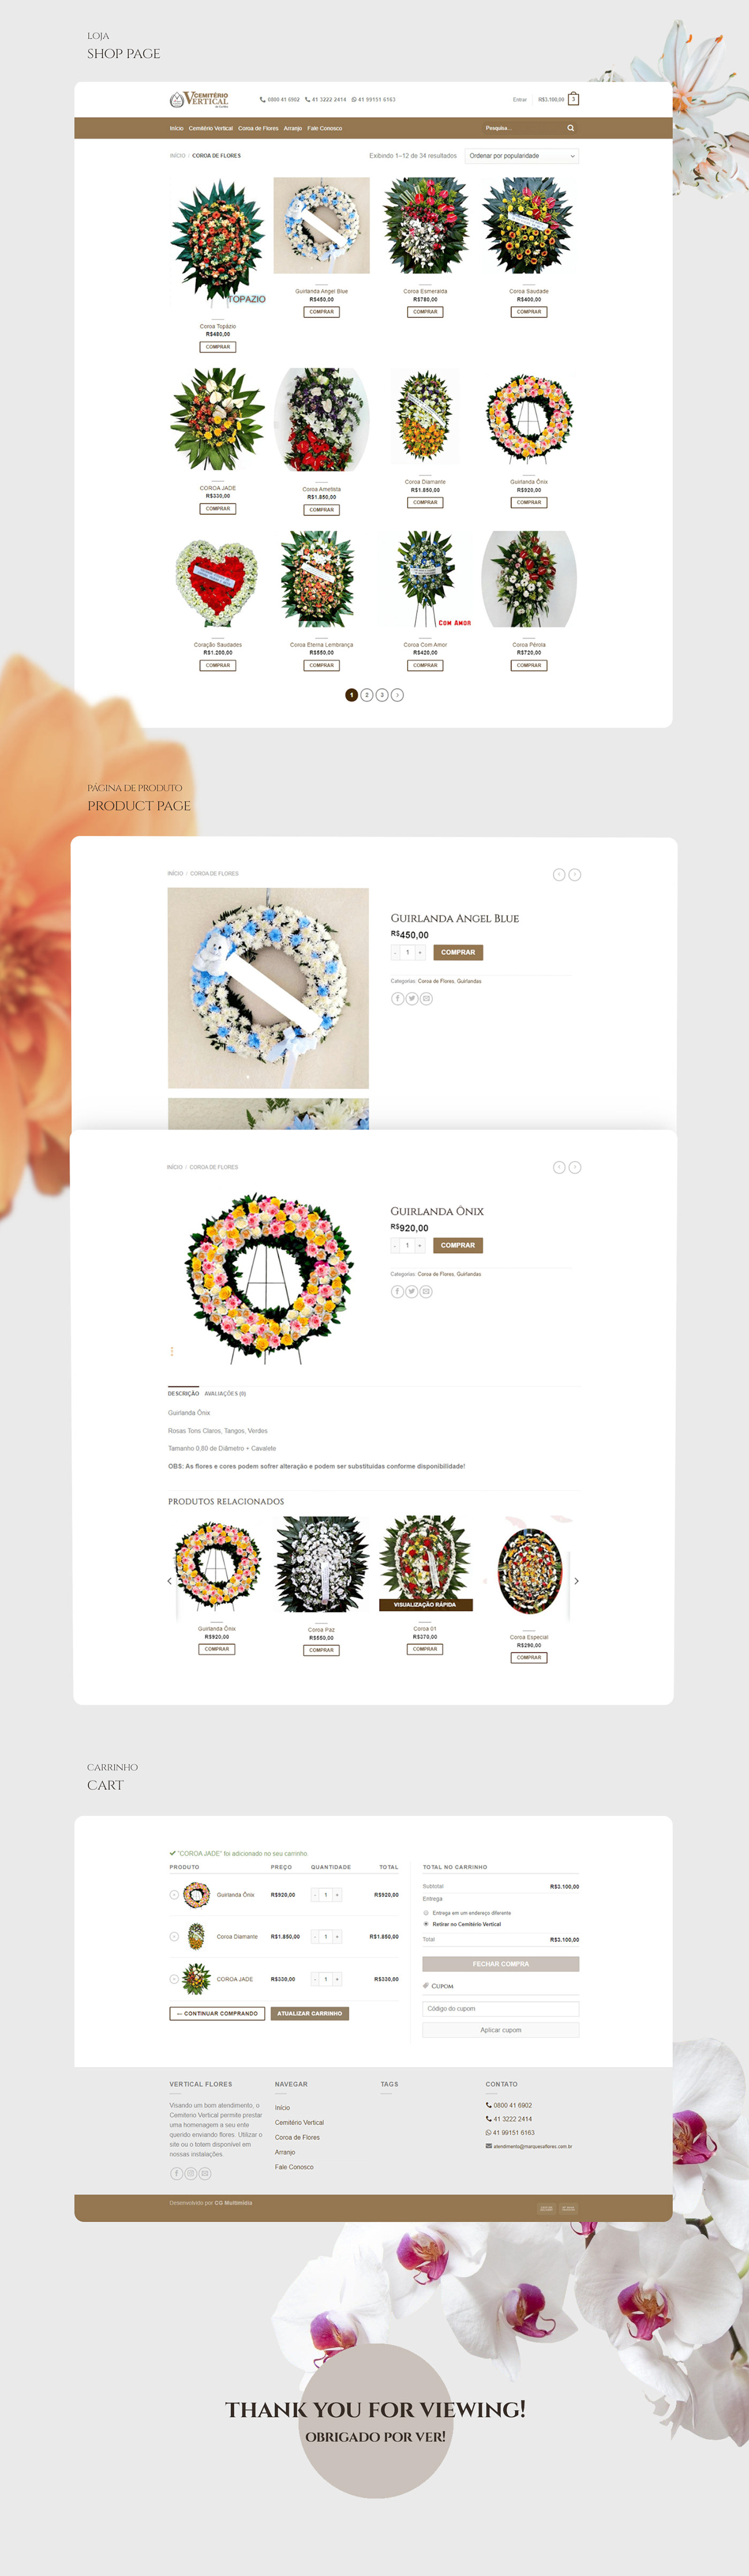 Carlos Ferreira cemiterio vertical CG Multimídia floral Web Design  Website wordpress